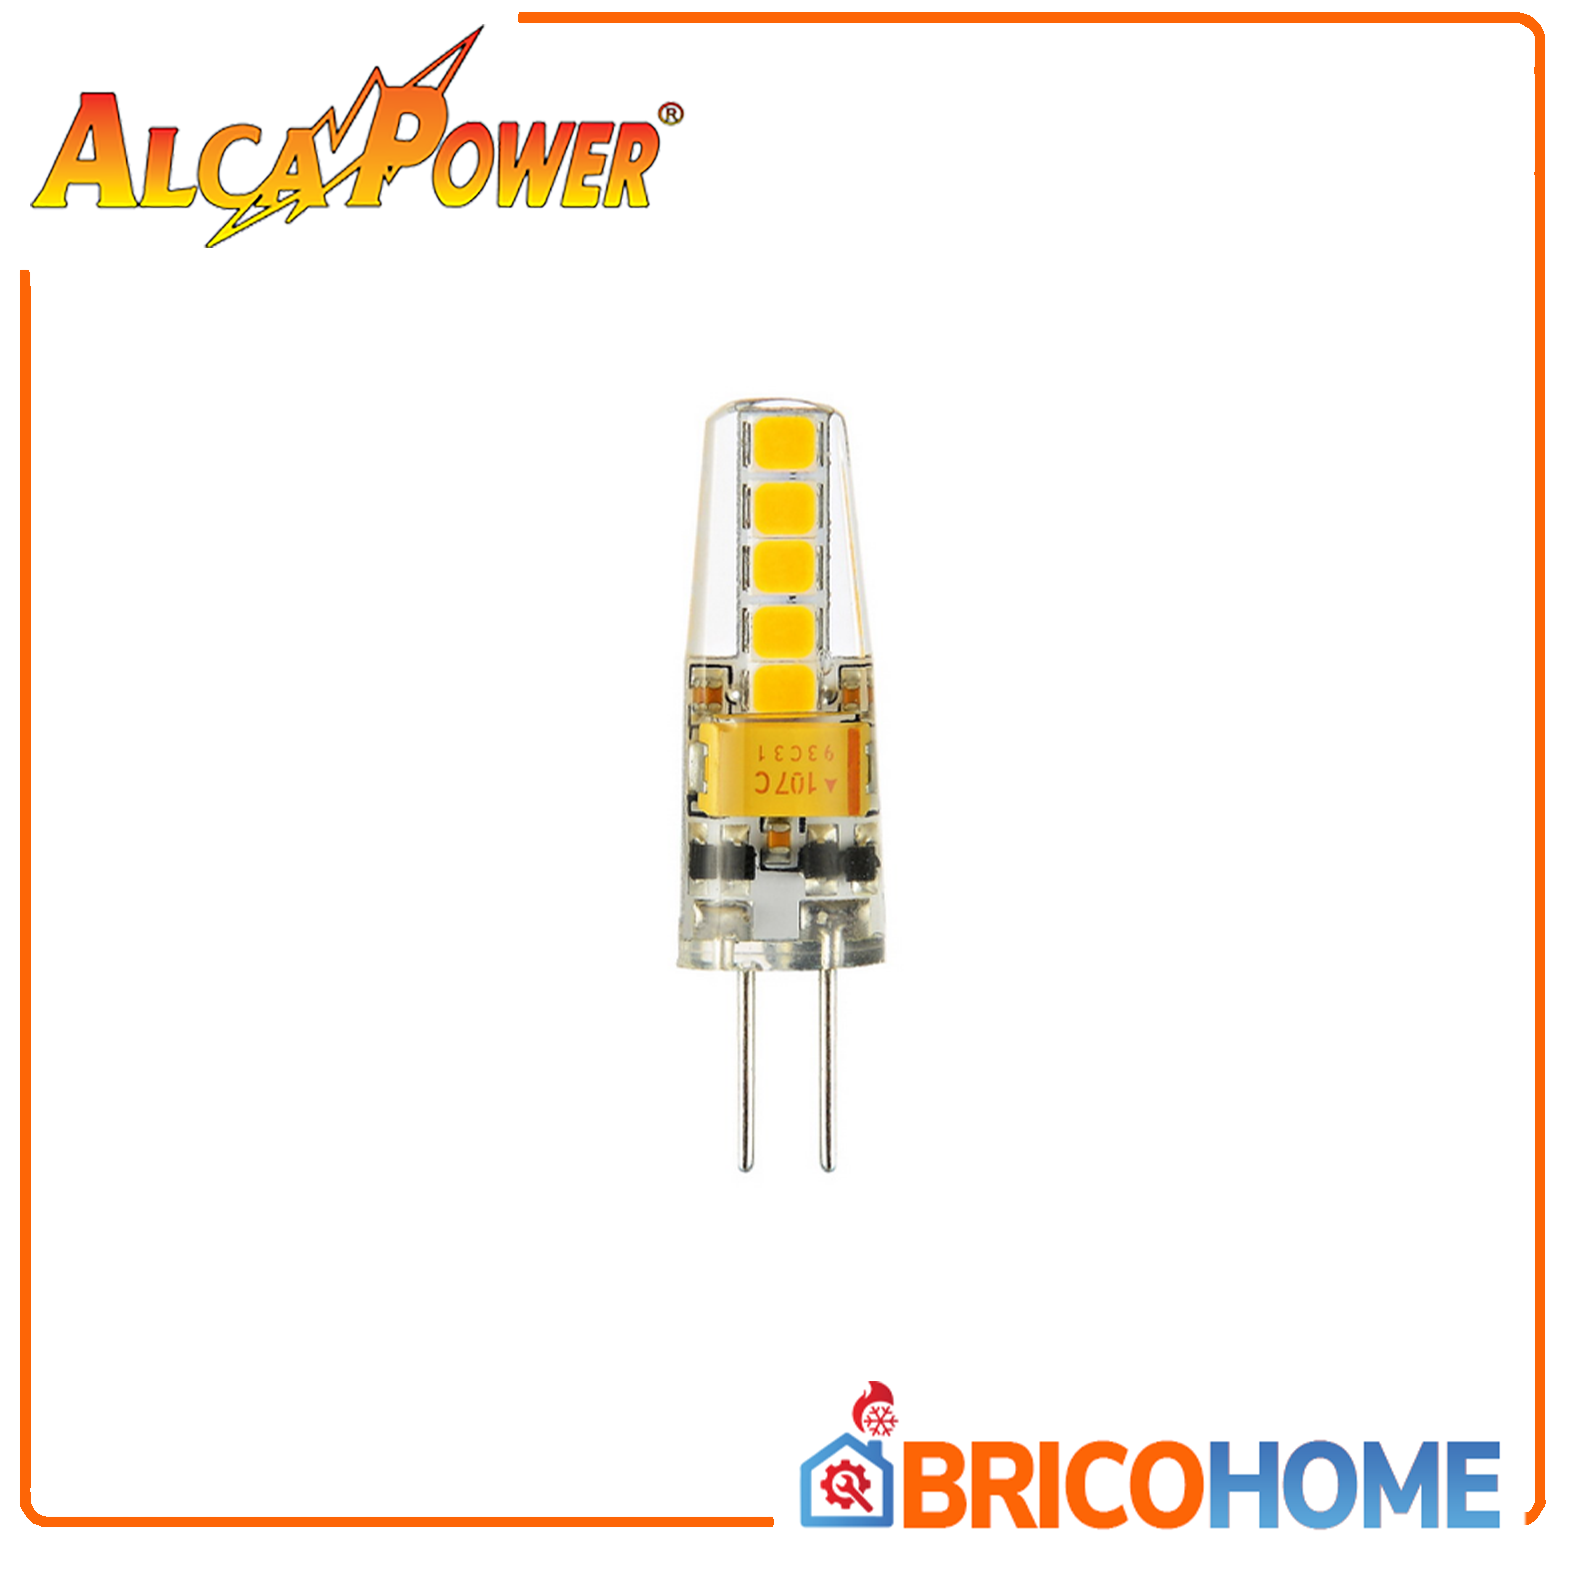 LED Bi-plug G4 12V 1.8W 200lm 6000K